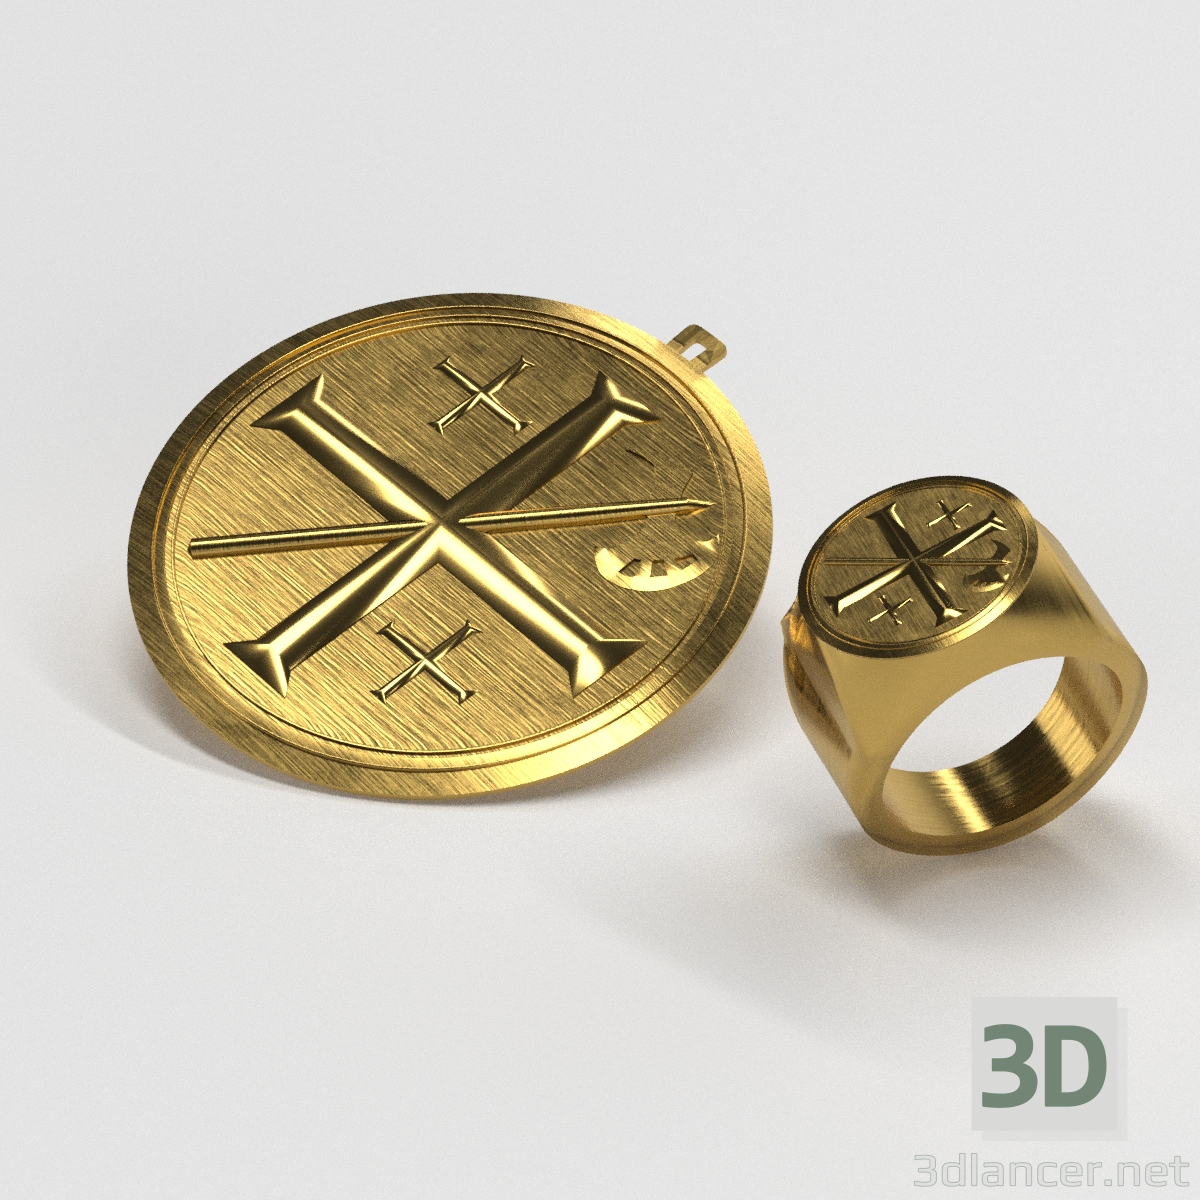 3d Ring and medallion model buy - render